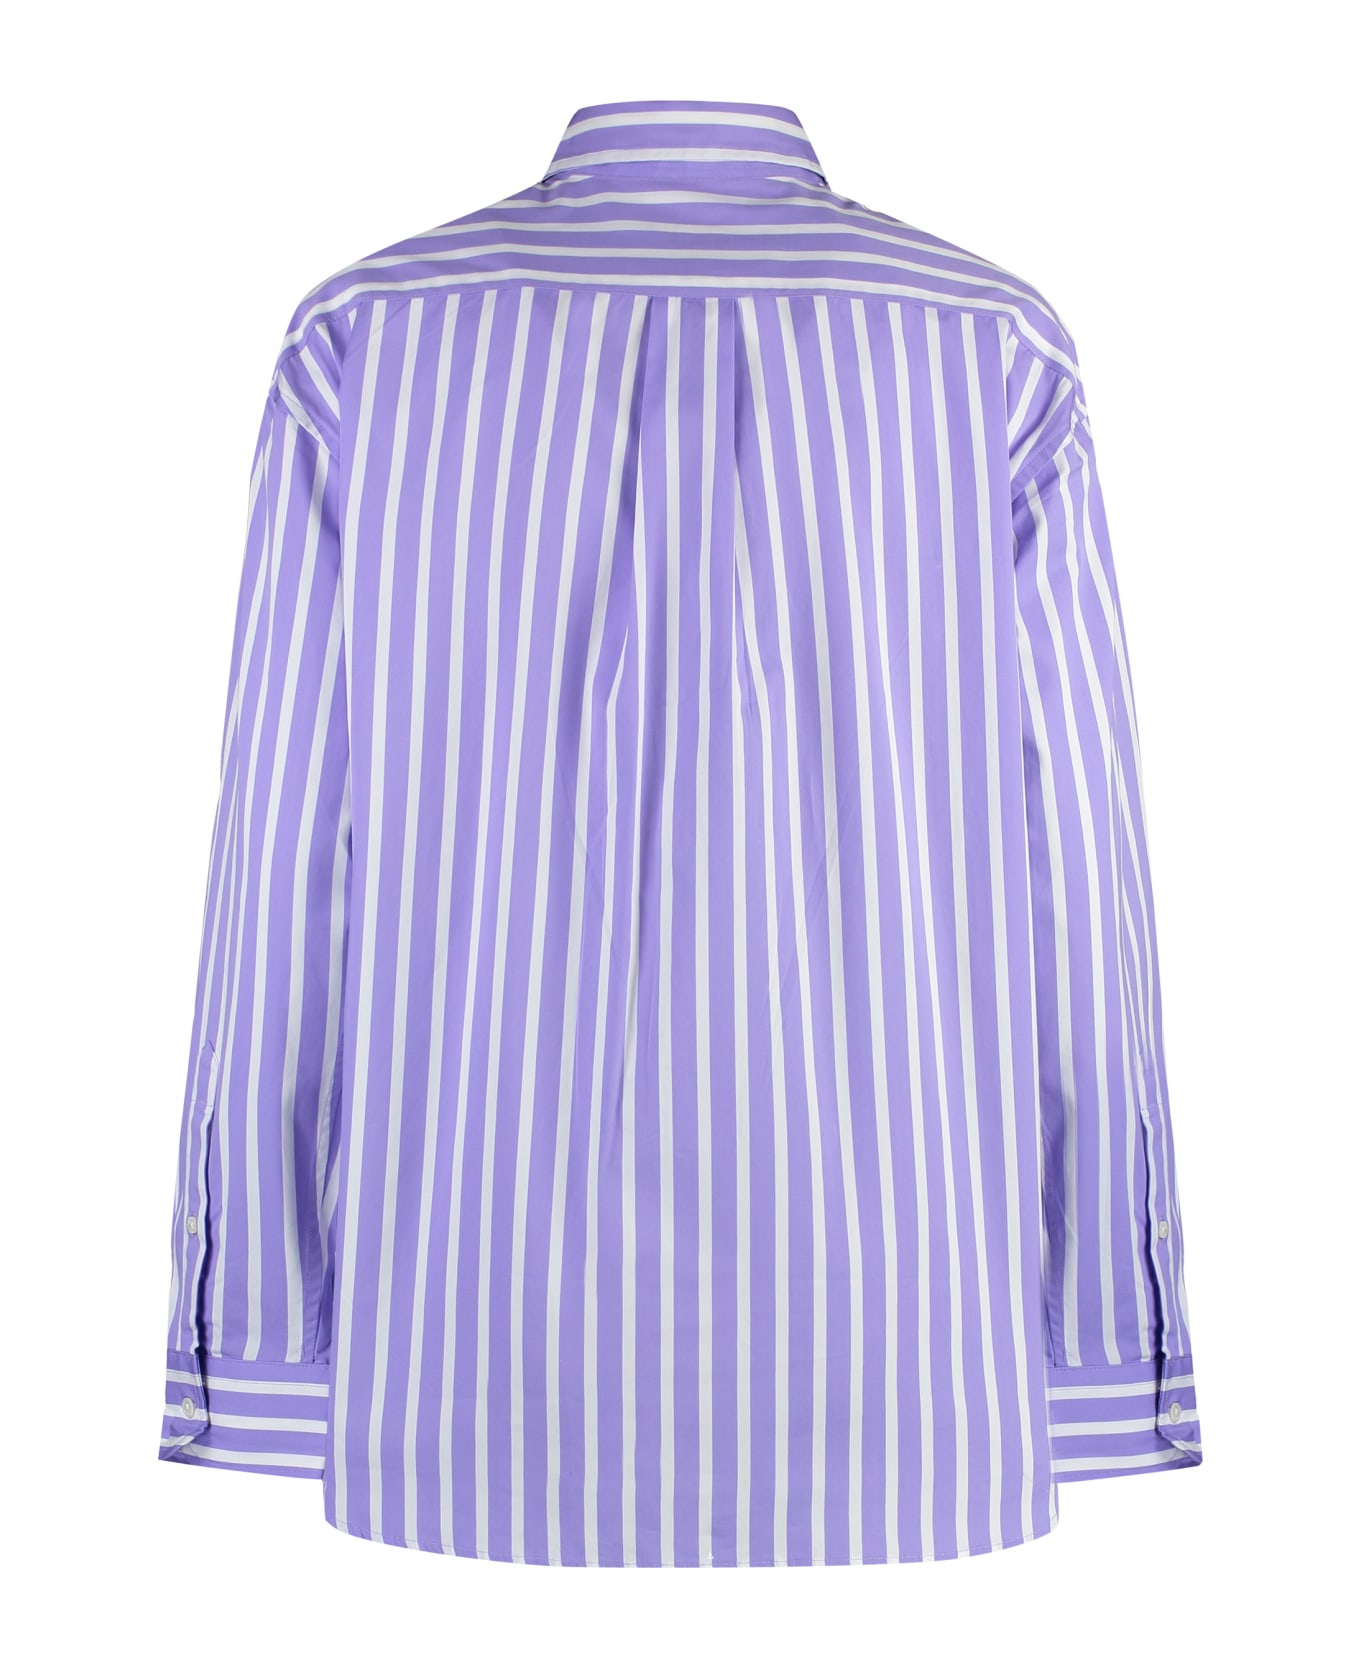 Polo Ralph Lauren Striped Cotton Shirt - Lilac